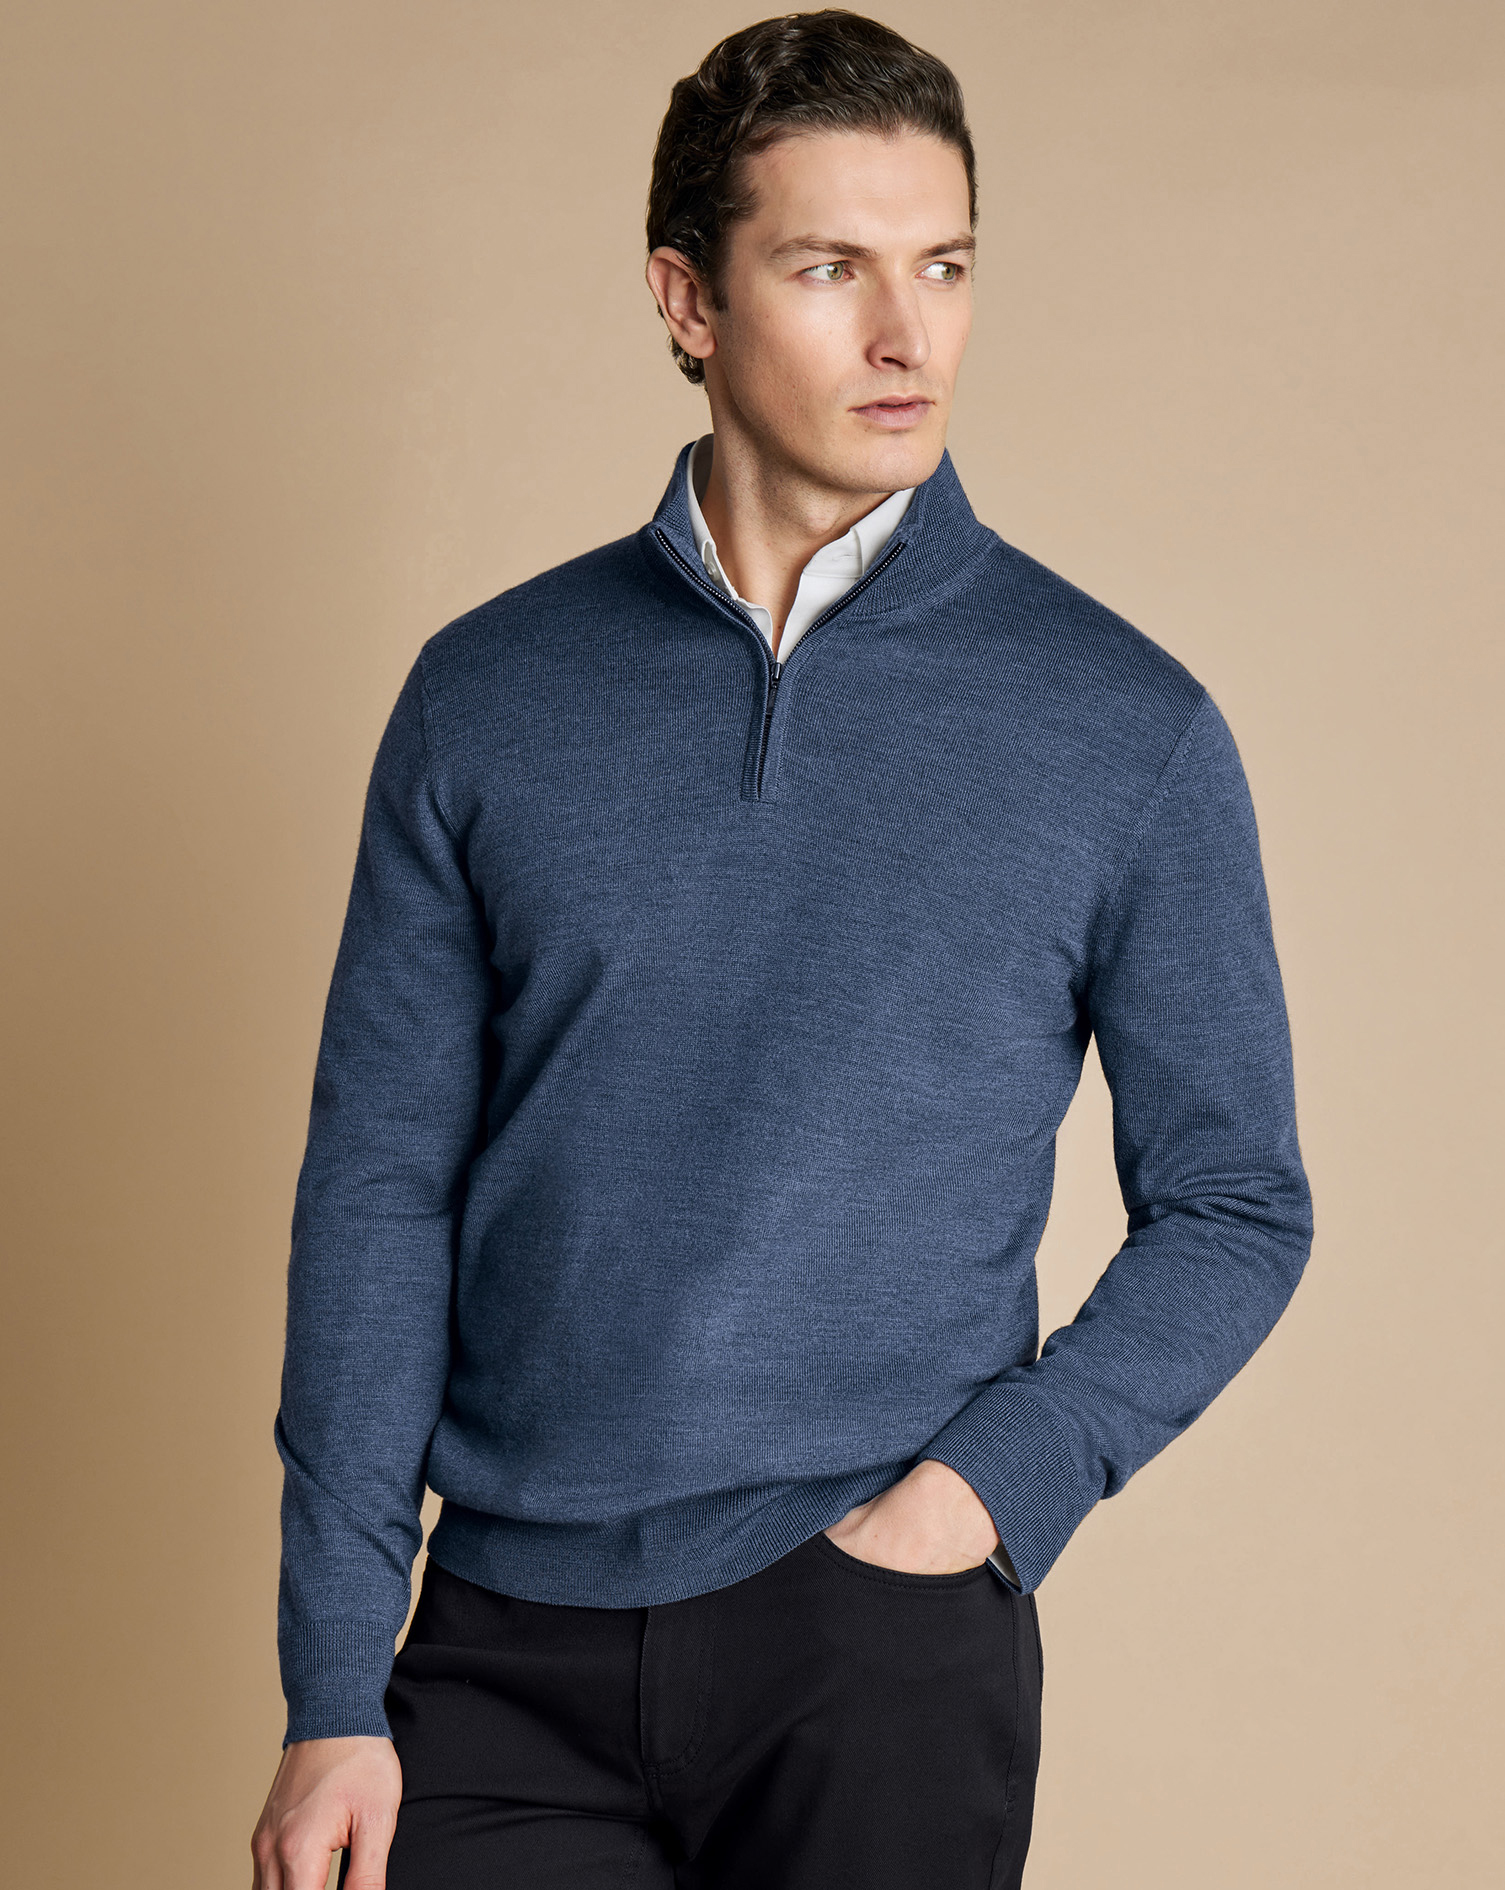 Men's Charles Tyrwhitt Zip Neck Sweater - Indigo Melange Blue Size Small Merino
